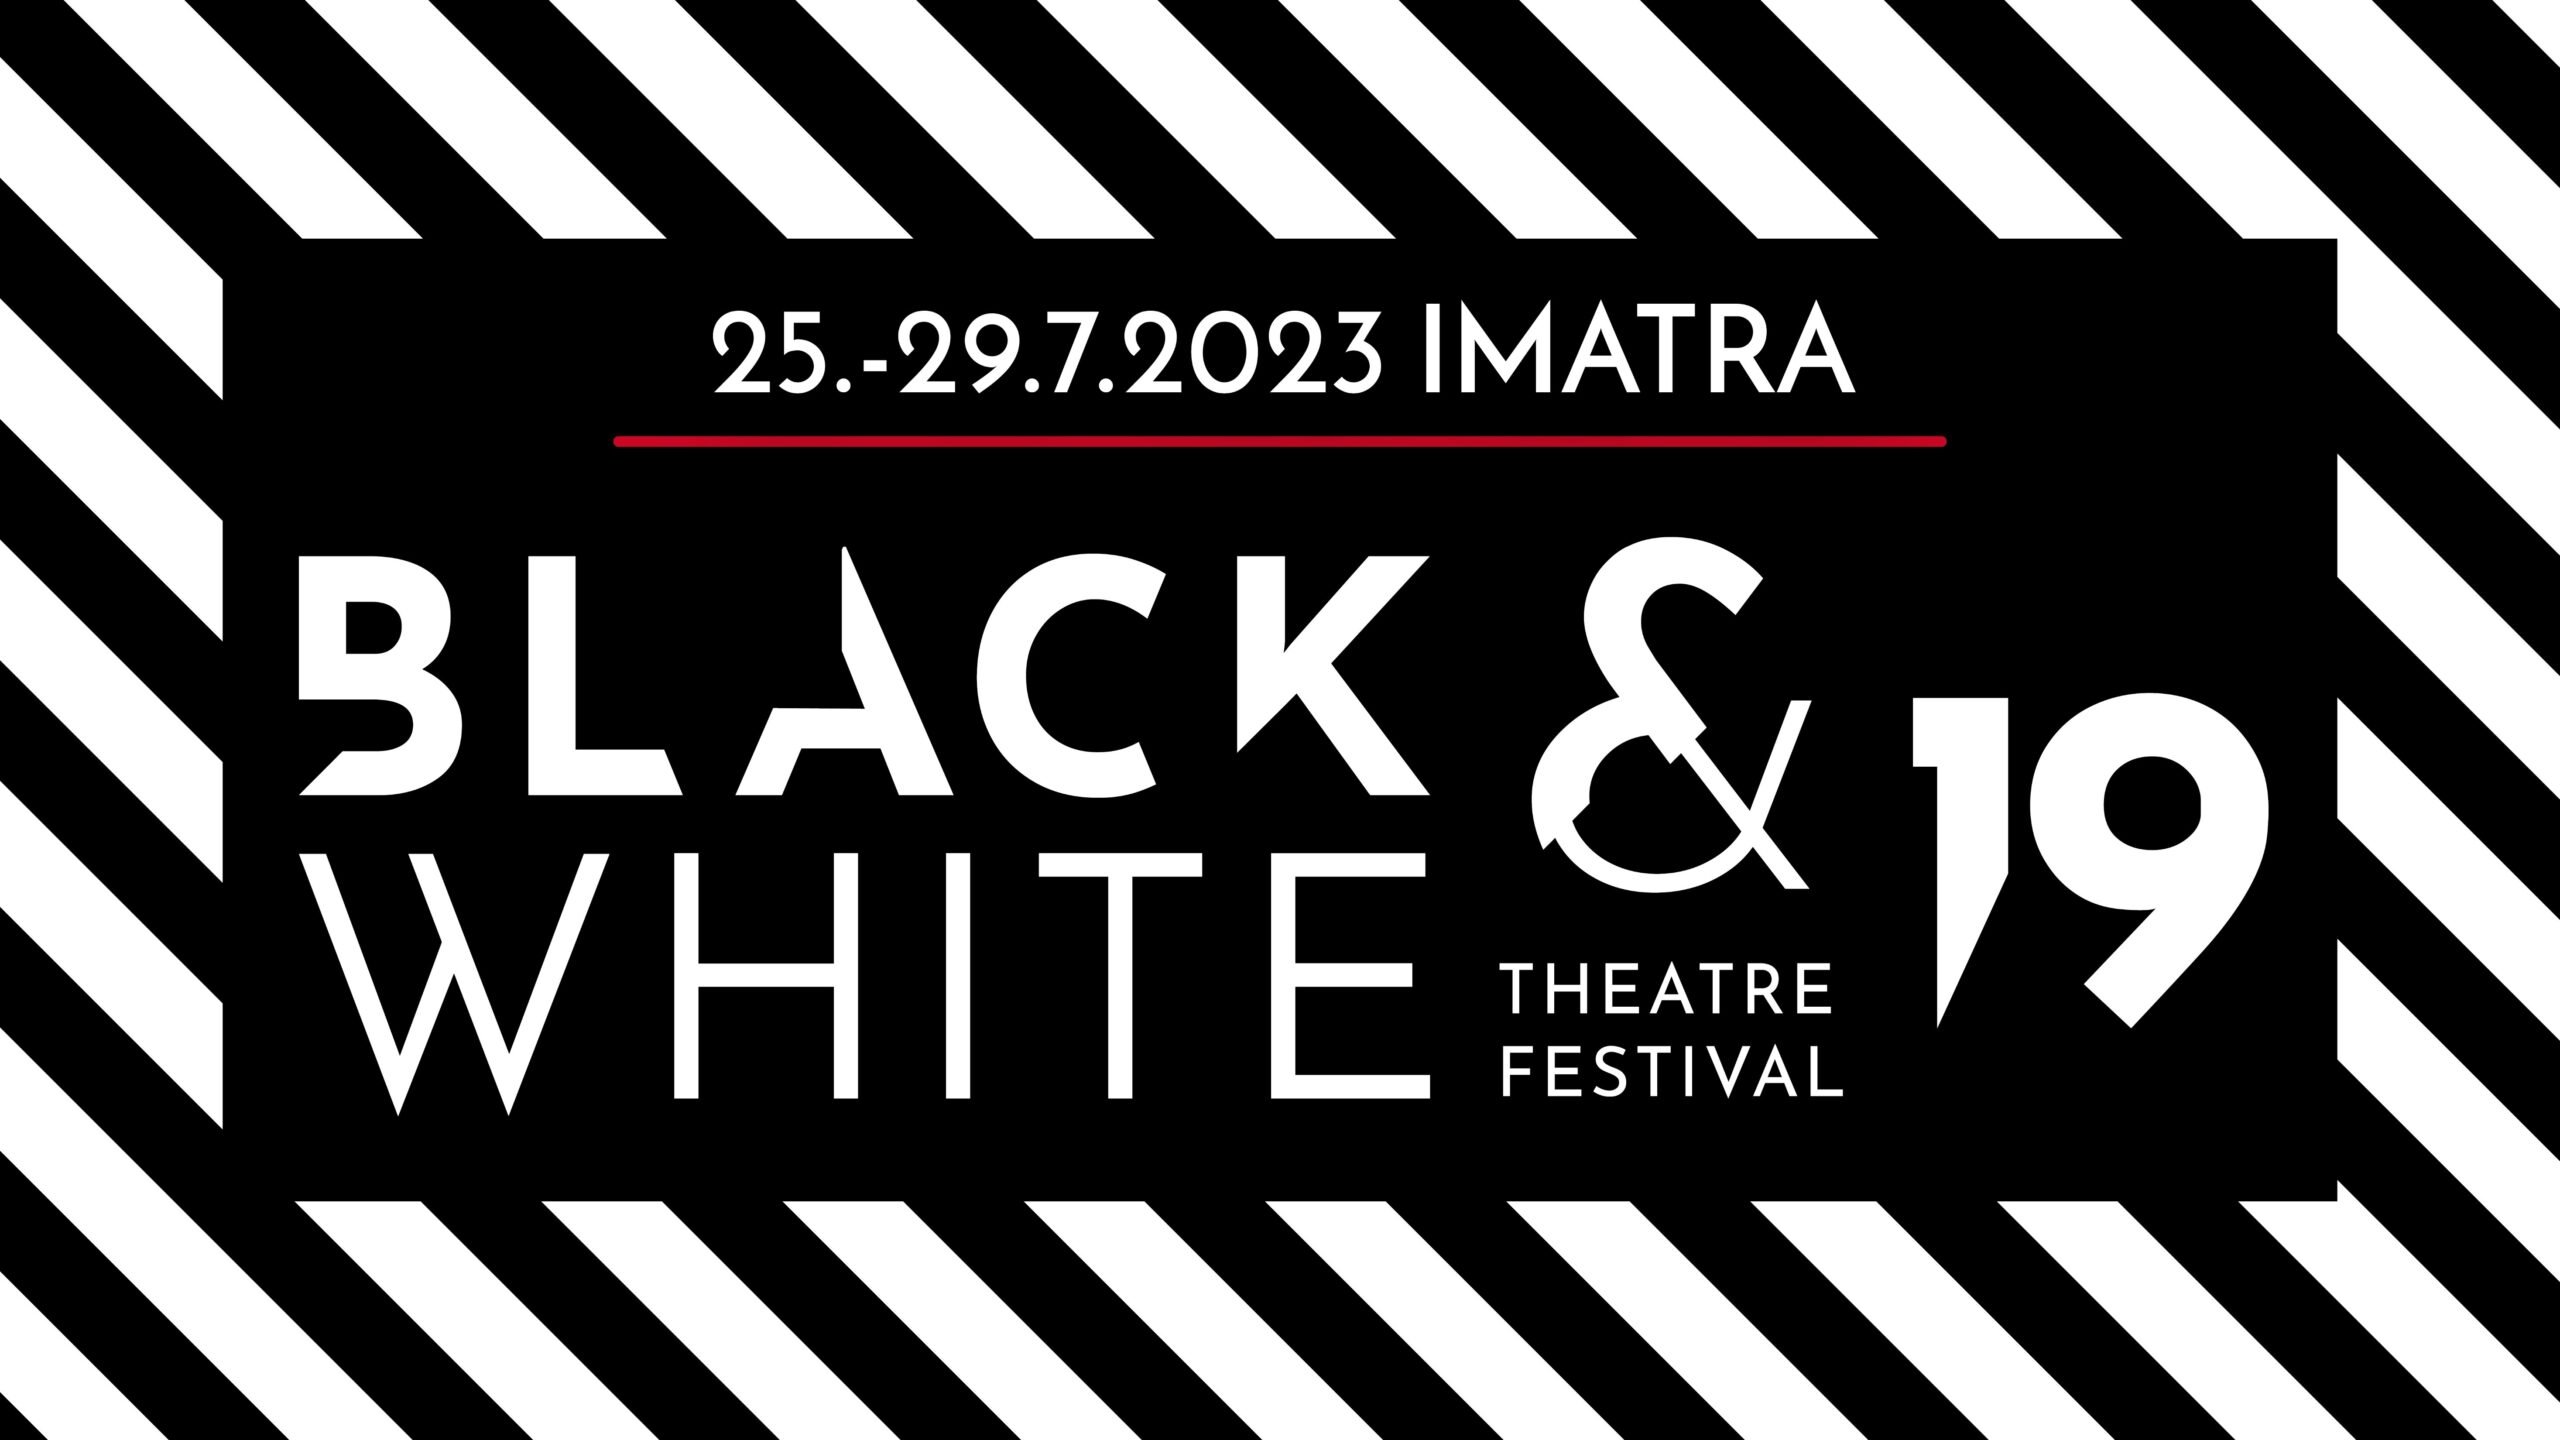 Mustavalkoisella taustalla tekstit "25.-29.7.2023 Imatra, Black & White theatre festival".